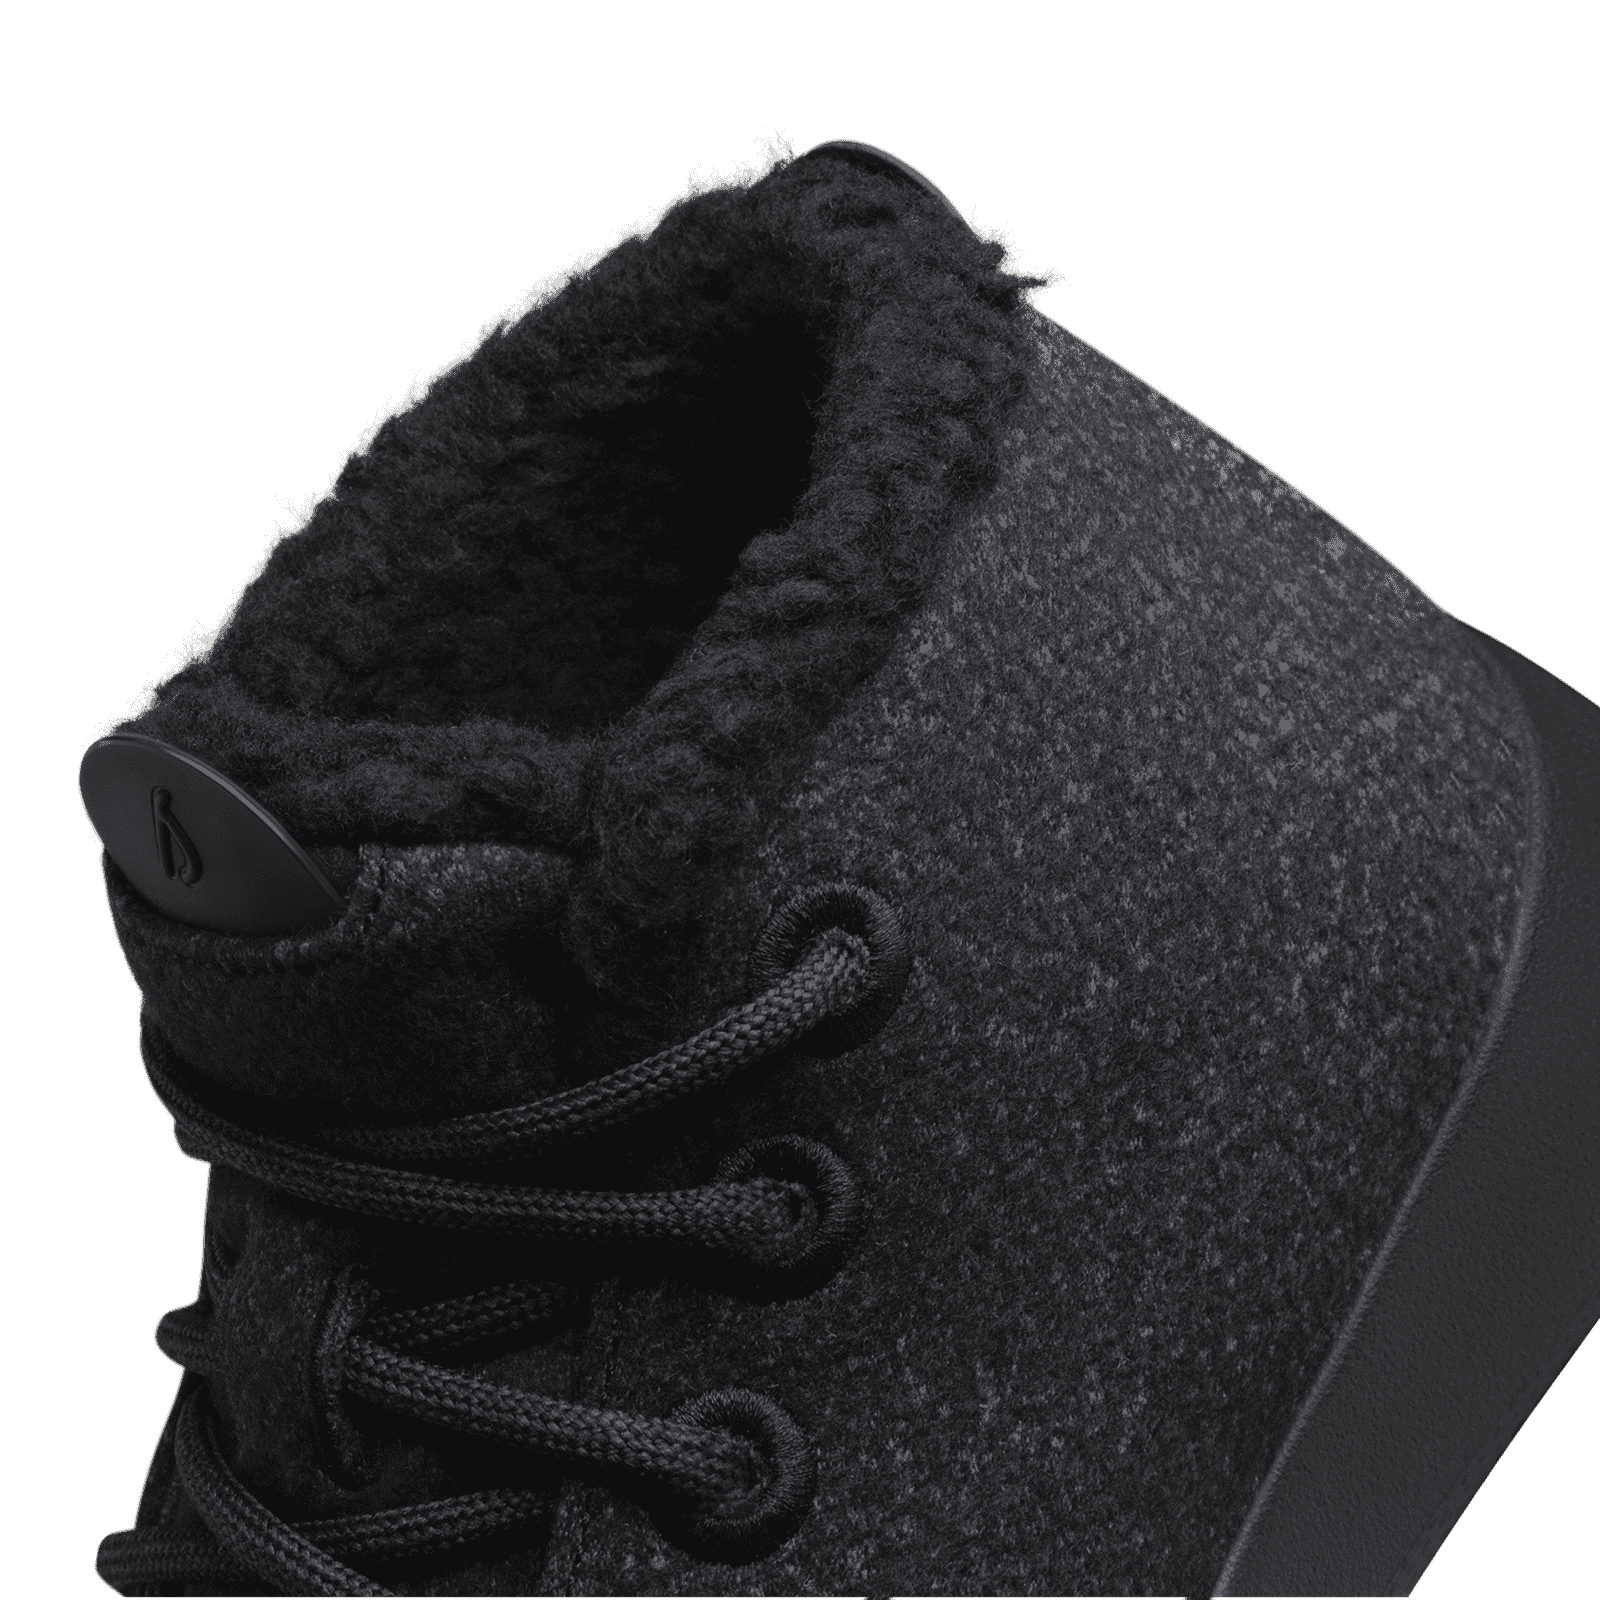 Men's Wool Runner-up Mizzle Fluffs - Natural Black (Black Sole)